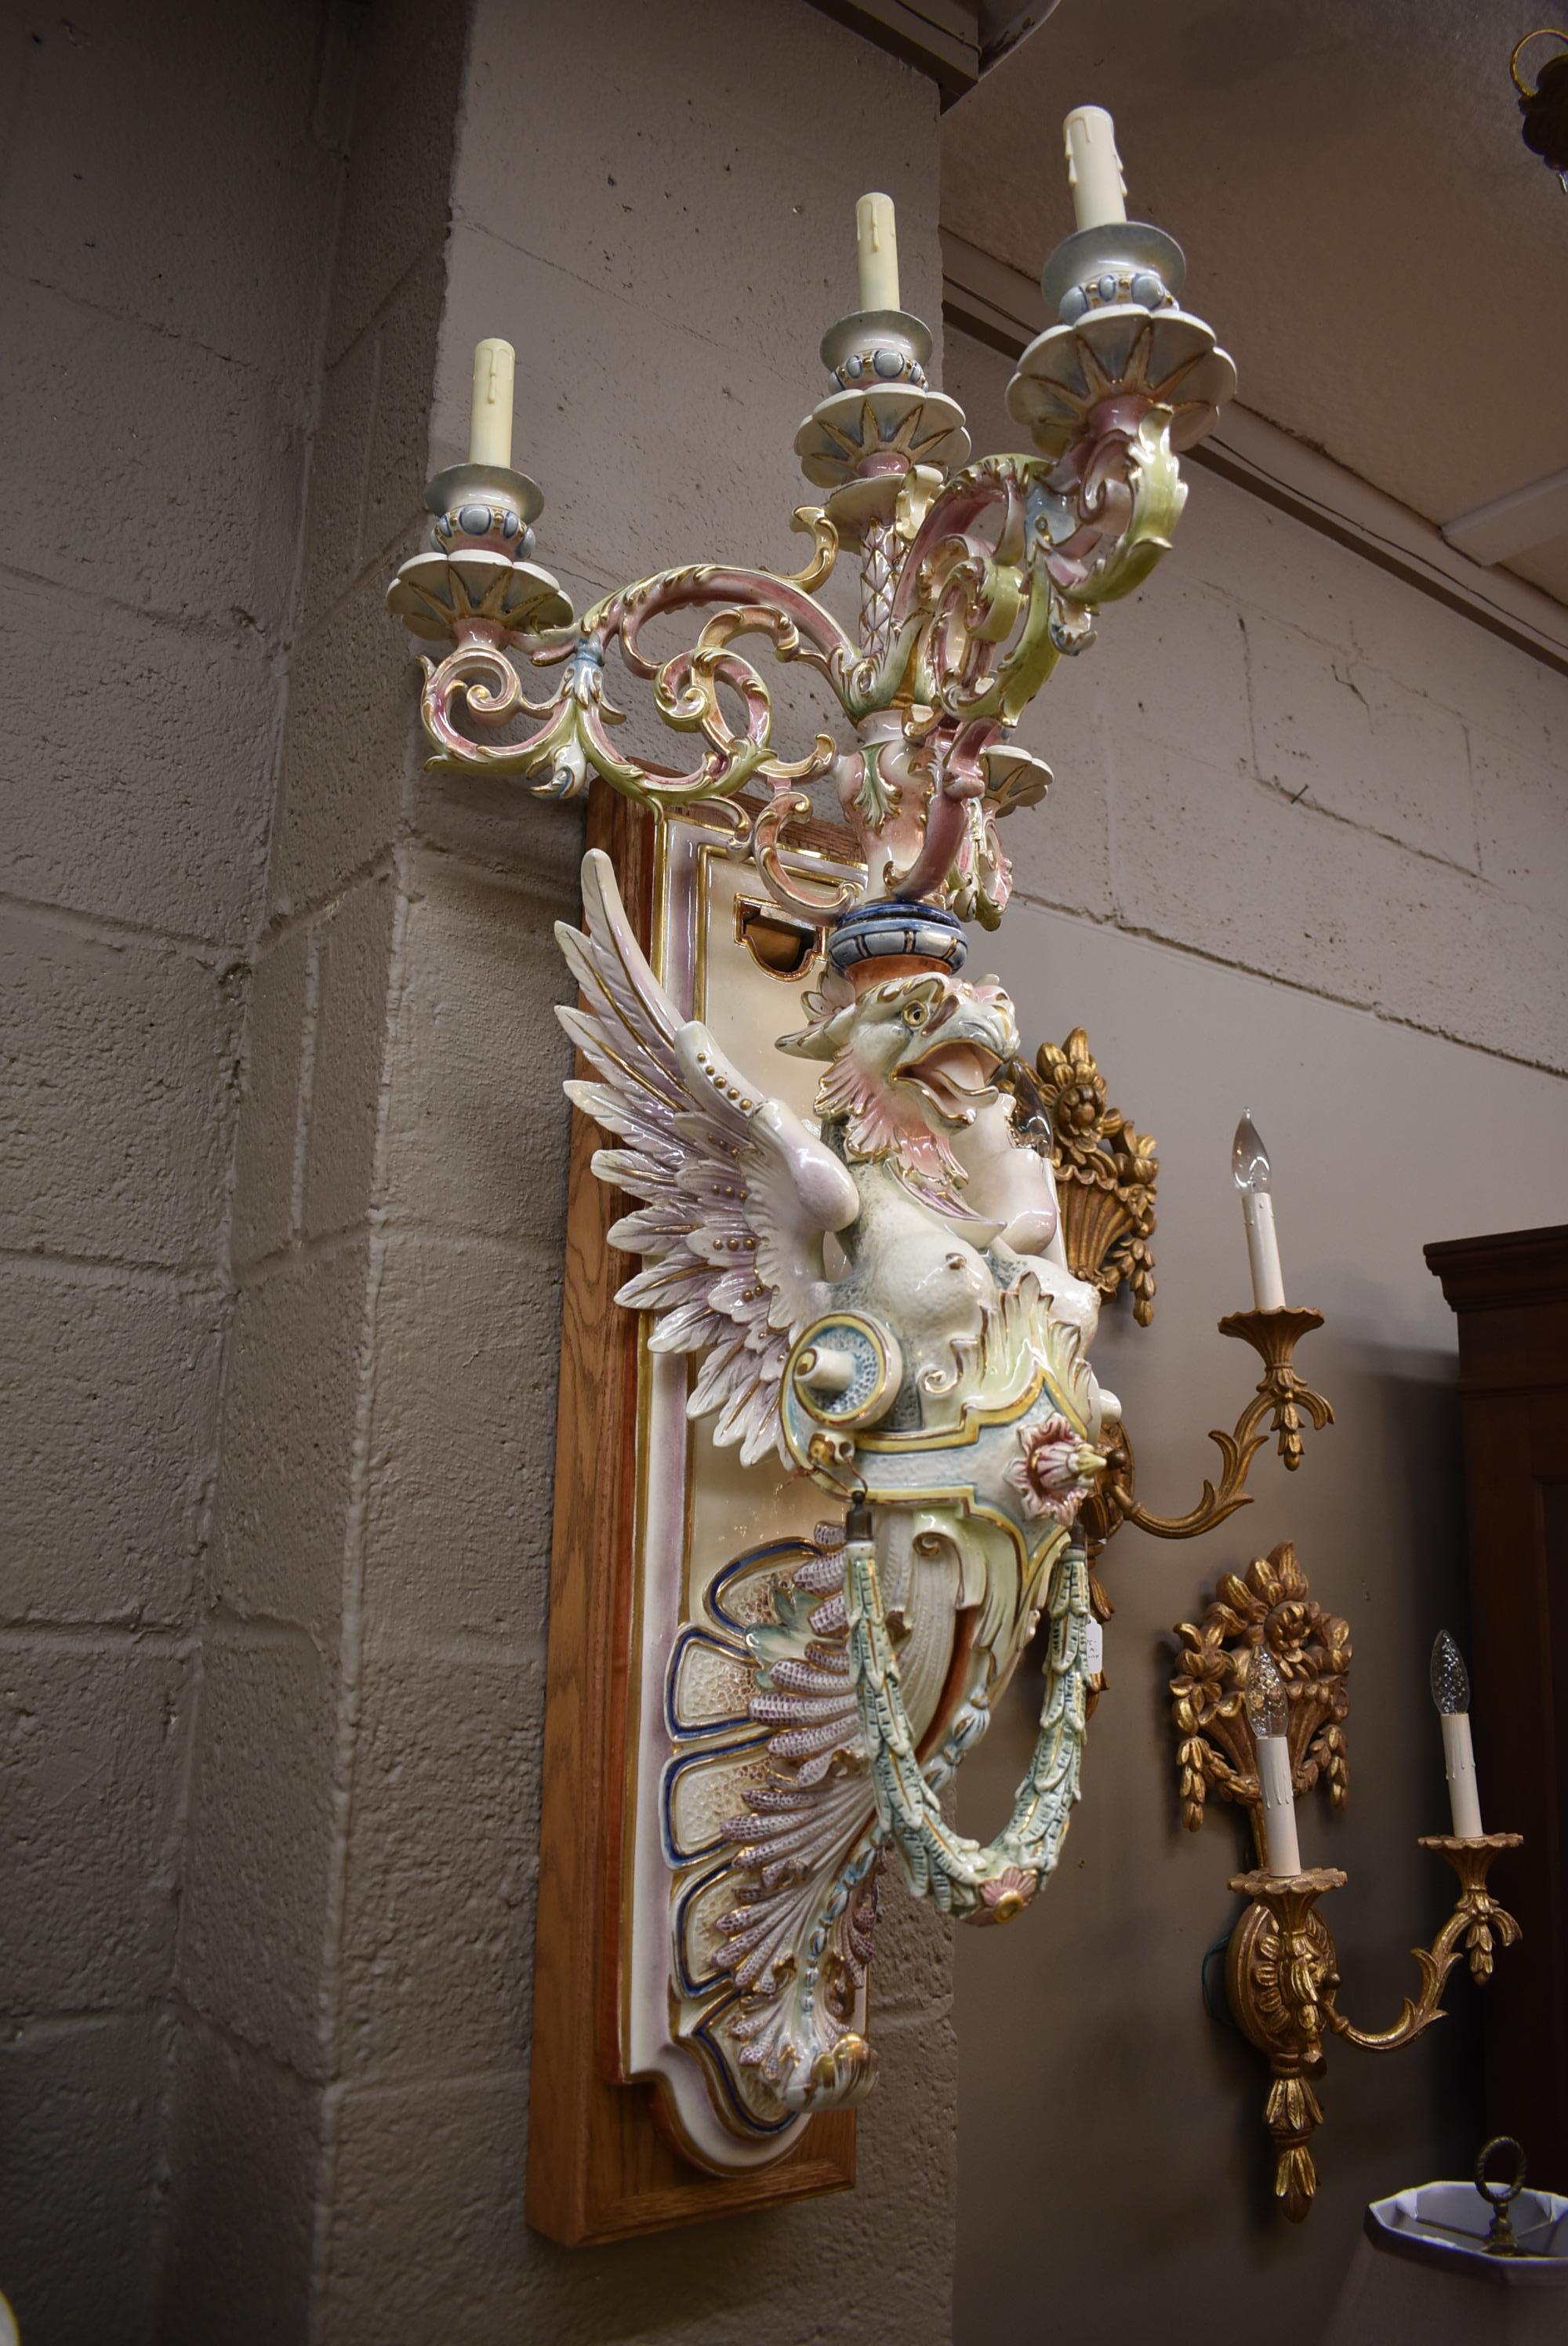 Oversize Majolica glazed porcelain winged lion wall sconce candelabra with four sockets.